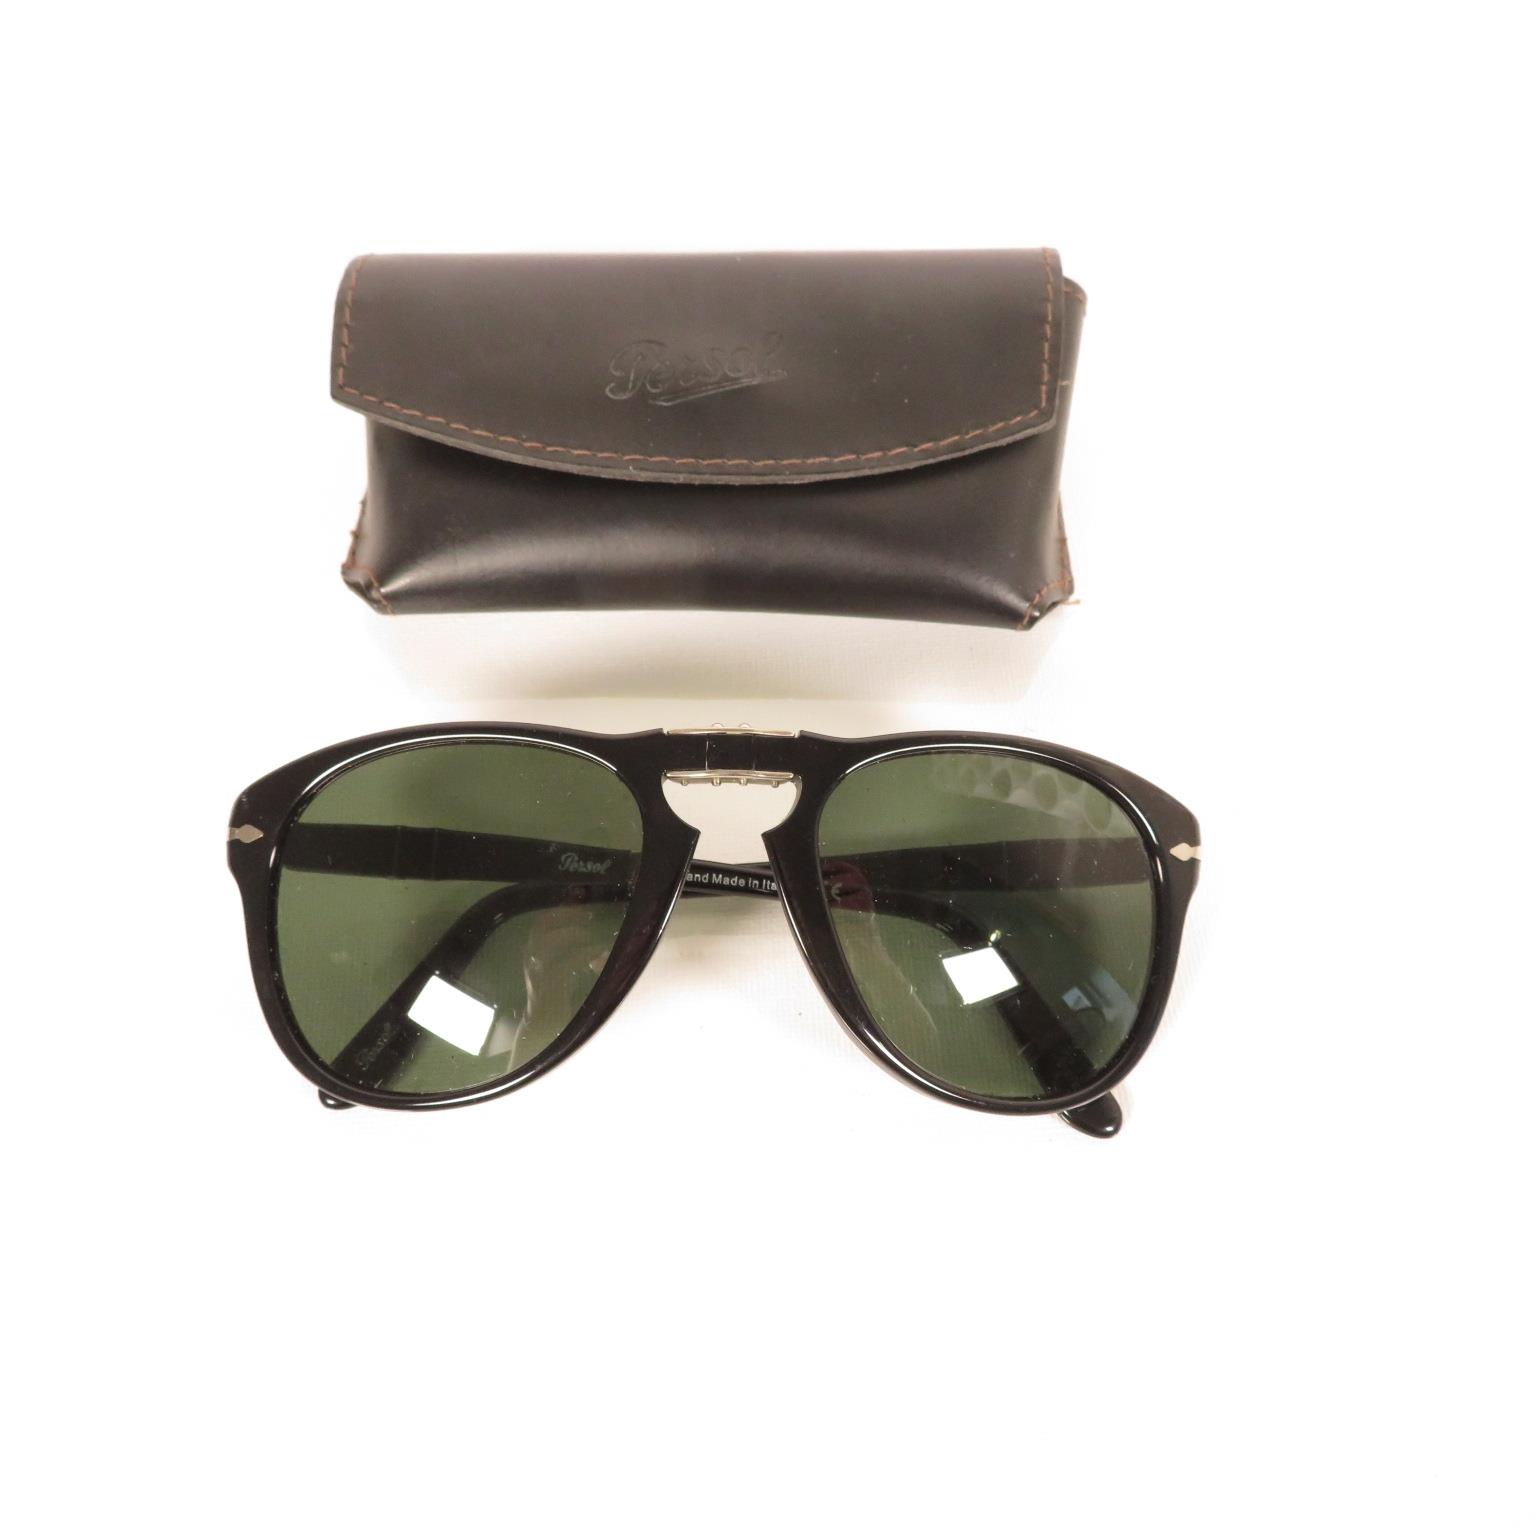 Pair of Porsche Folding Sunglasses, Per Sol folding Sunglasses, Oakley sunglasses and Porsche design - Image 6 of 17